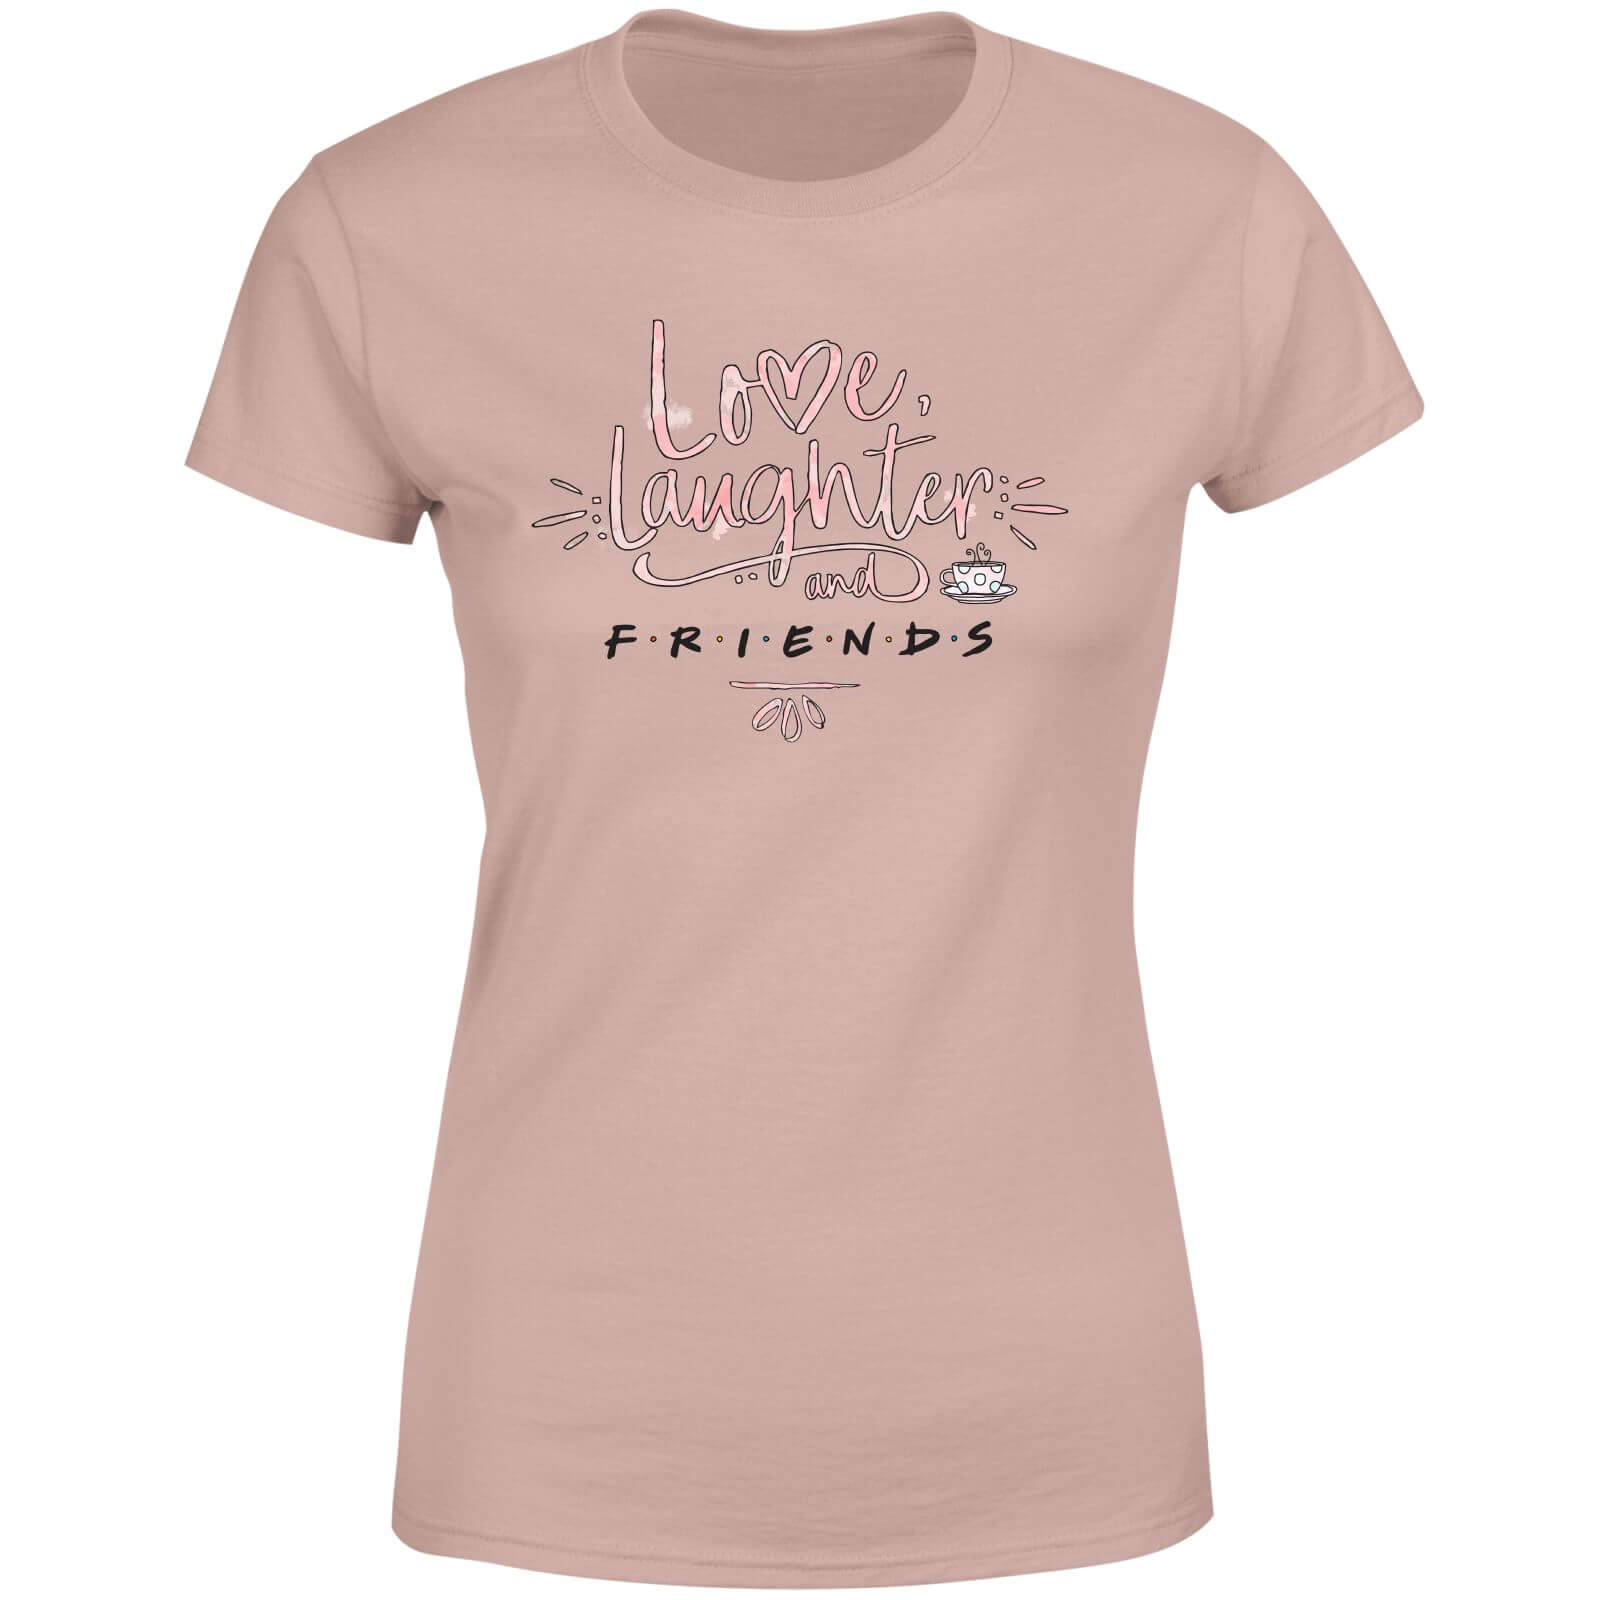 Friends Love Laughter Women's T-Shirt - Dusty Pink - XS - Dusty pink